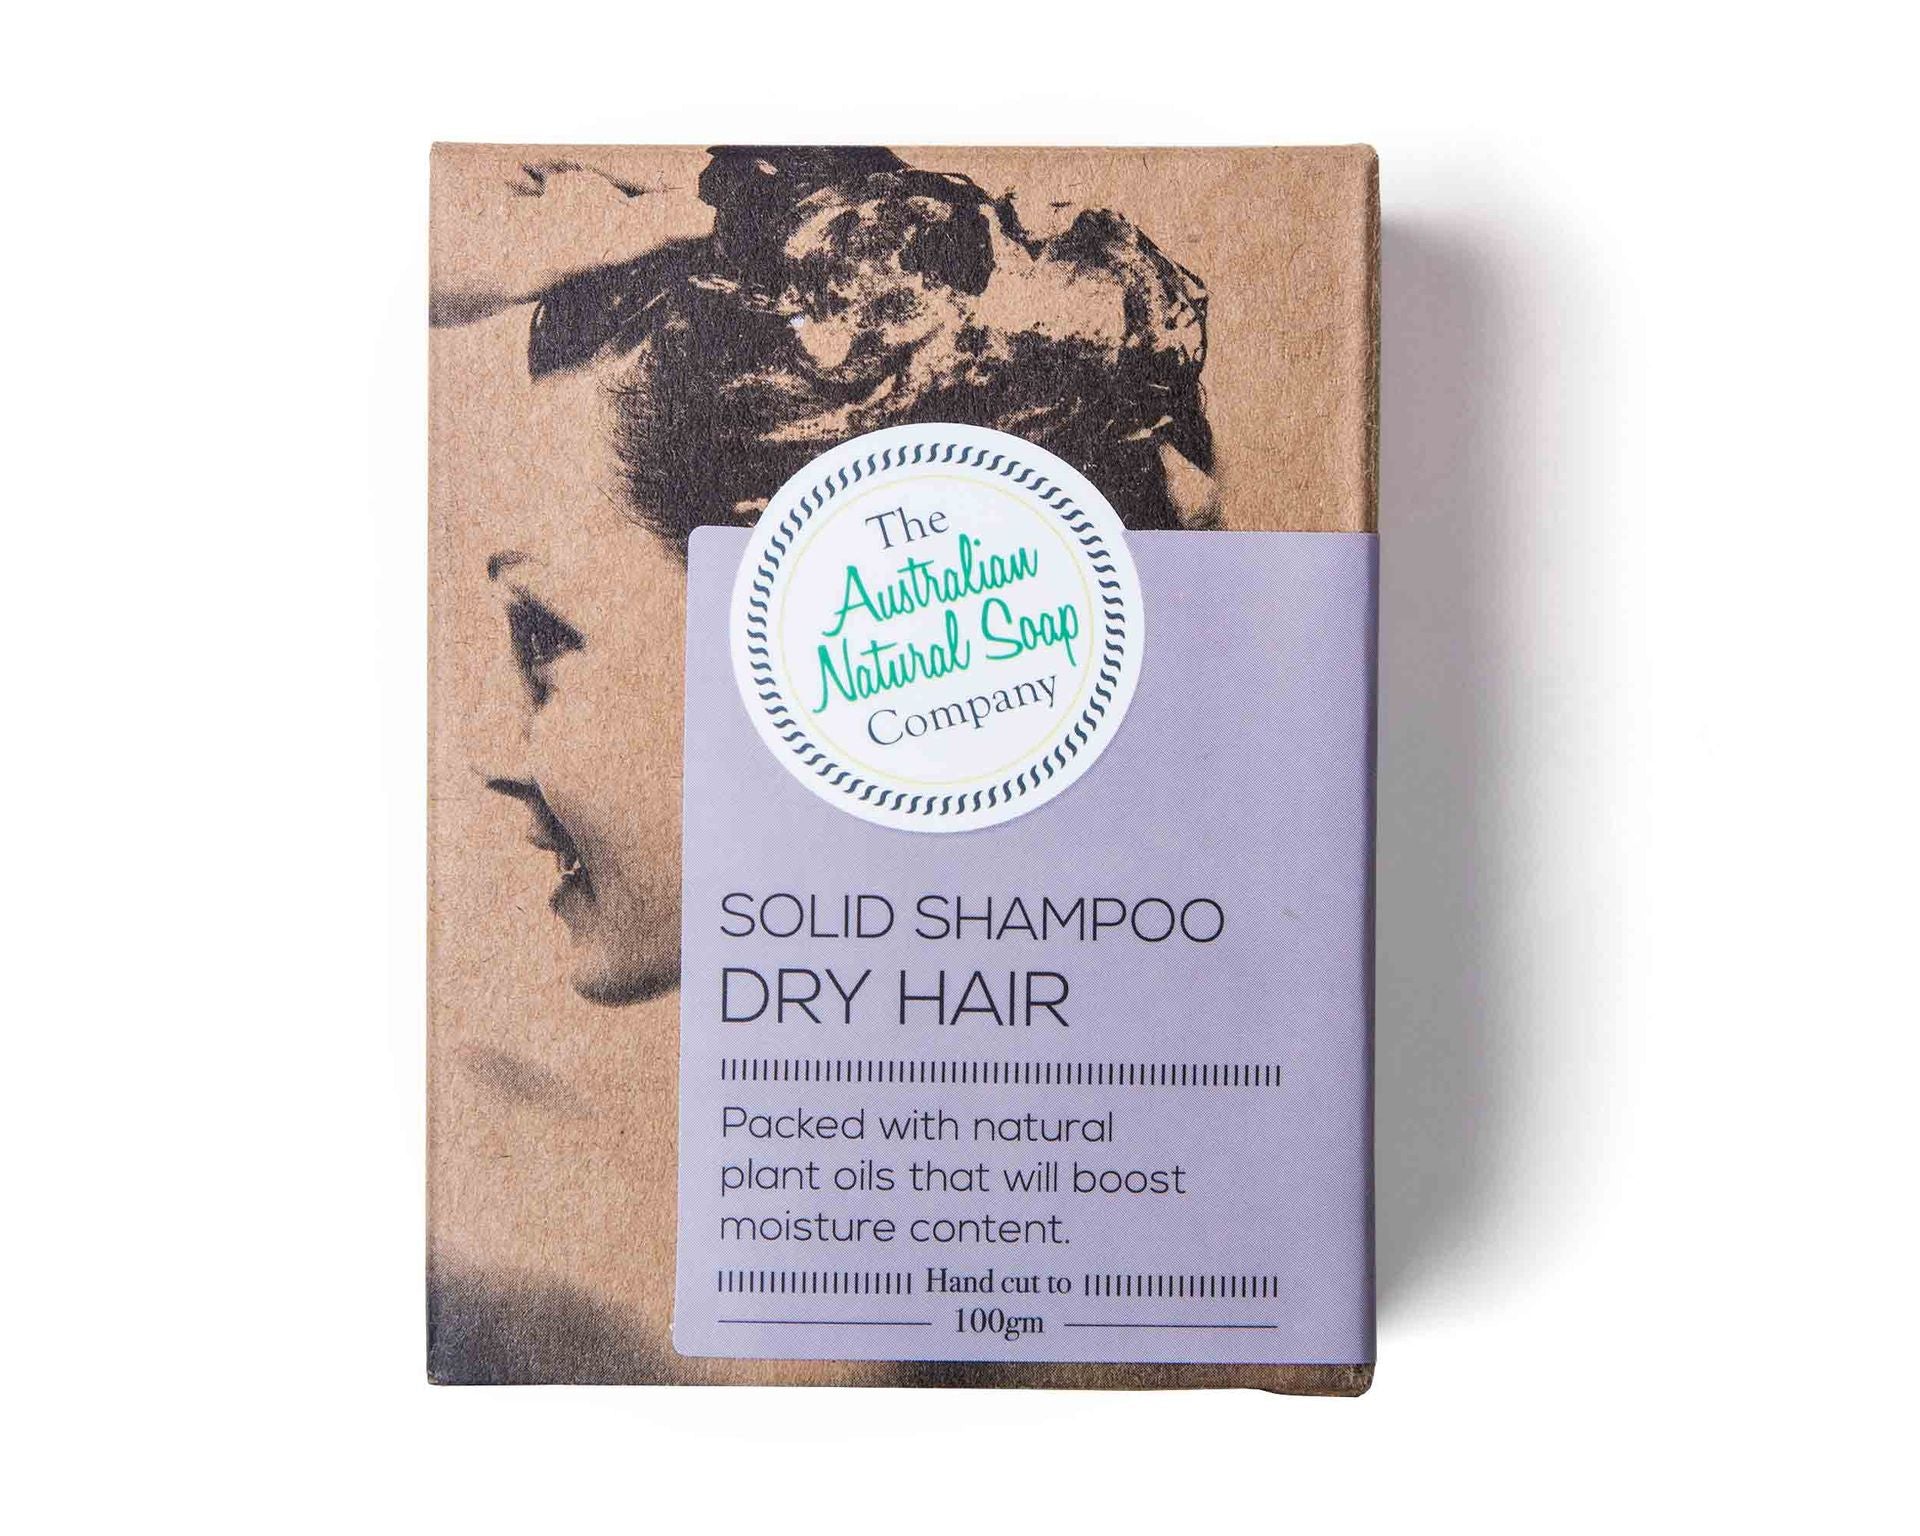 Australian Natural Soap Company shampoo bar for dry hair front of box